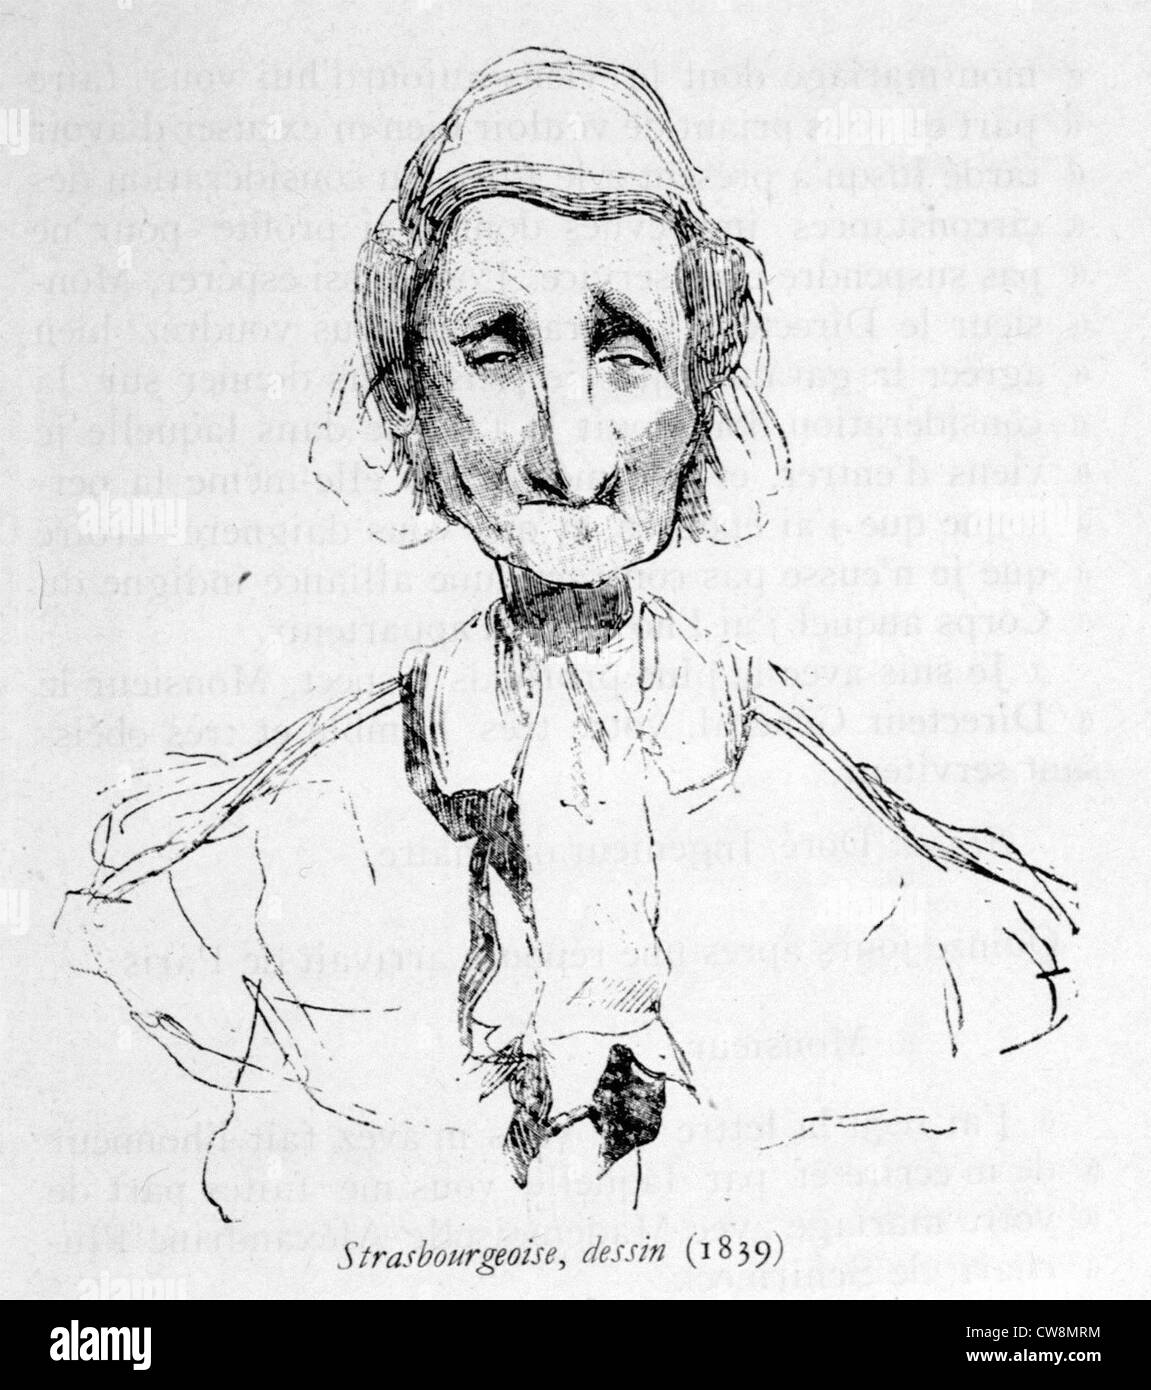 Dame de Strasbourg, dessin de Gustave Doré Banque D'Images